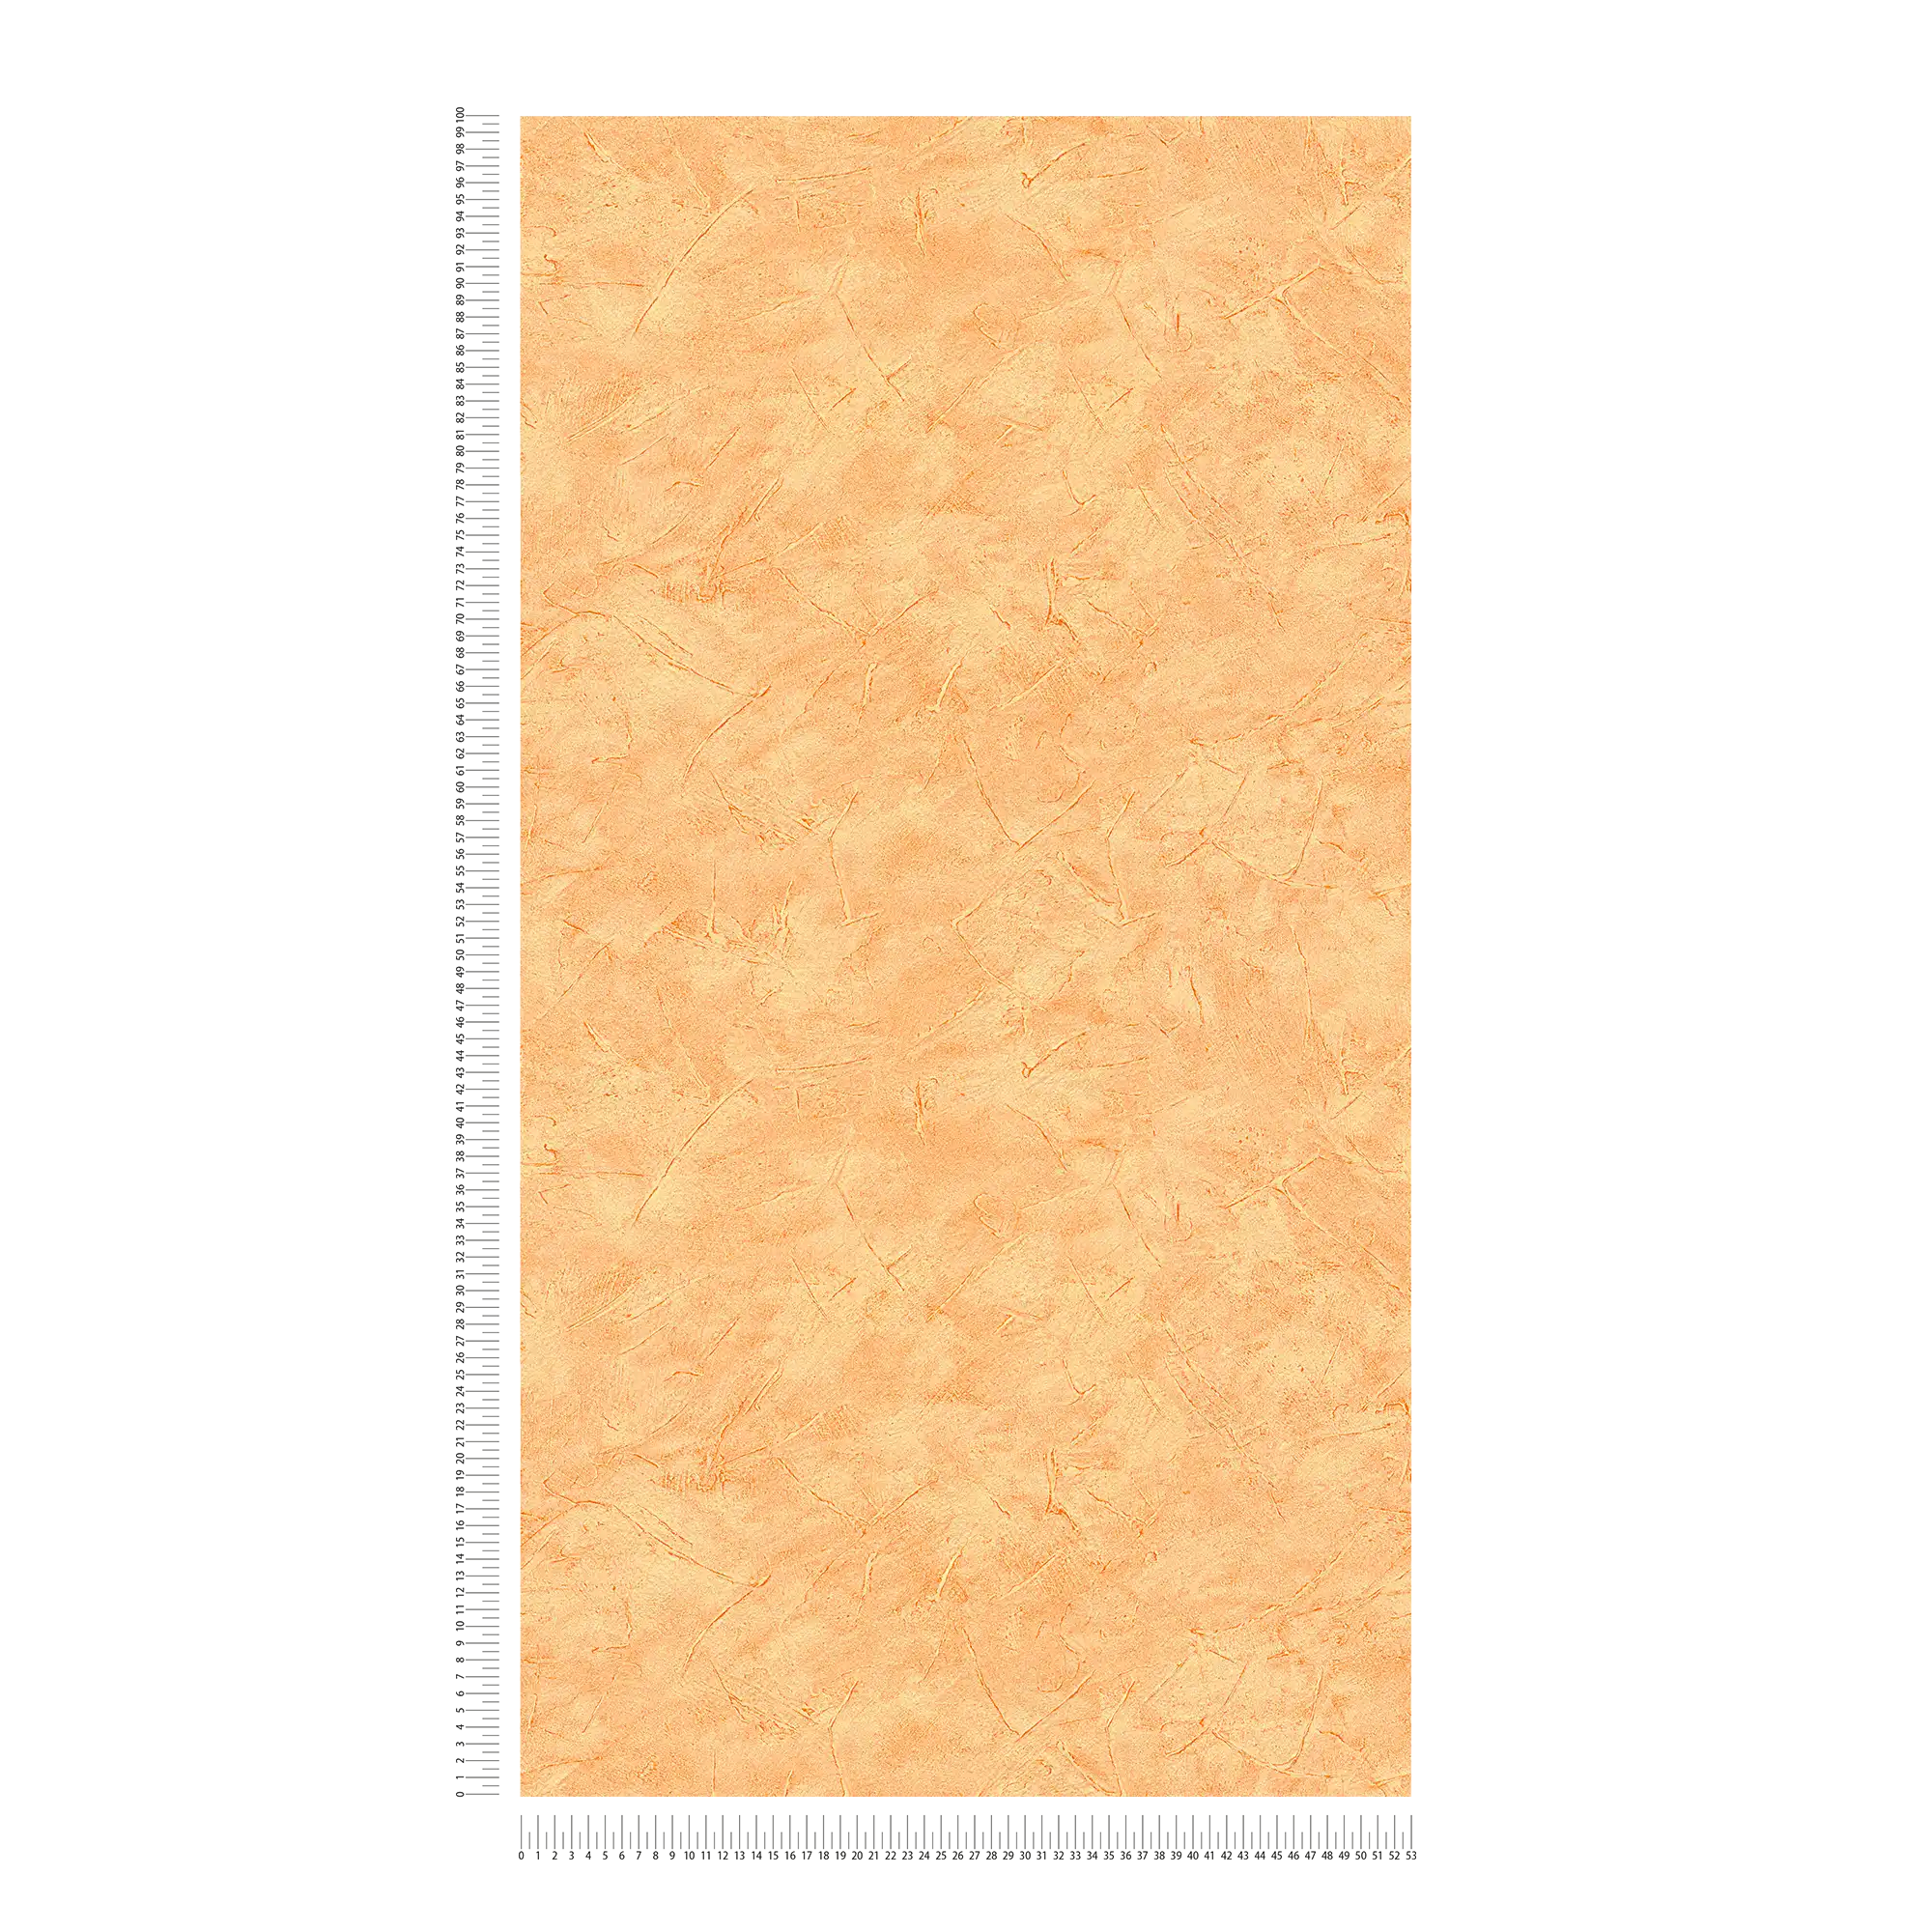             Plaster optics wallpaper with wipe look & hatch pattern - orange
        